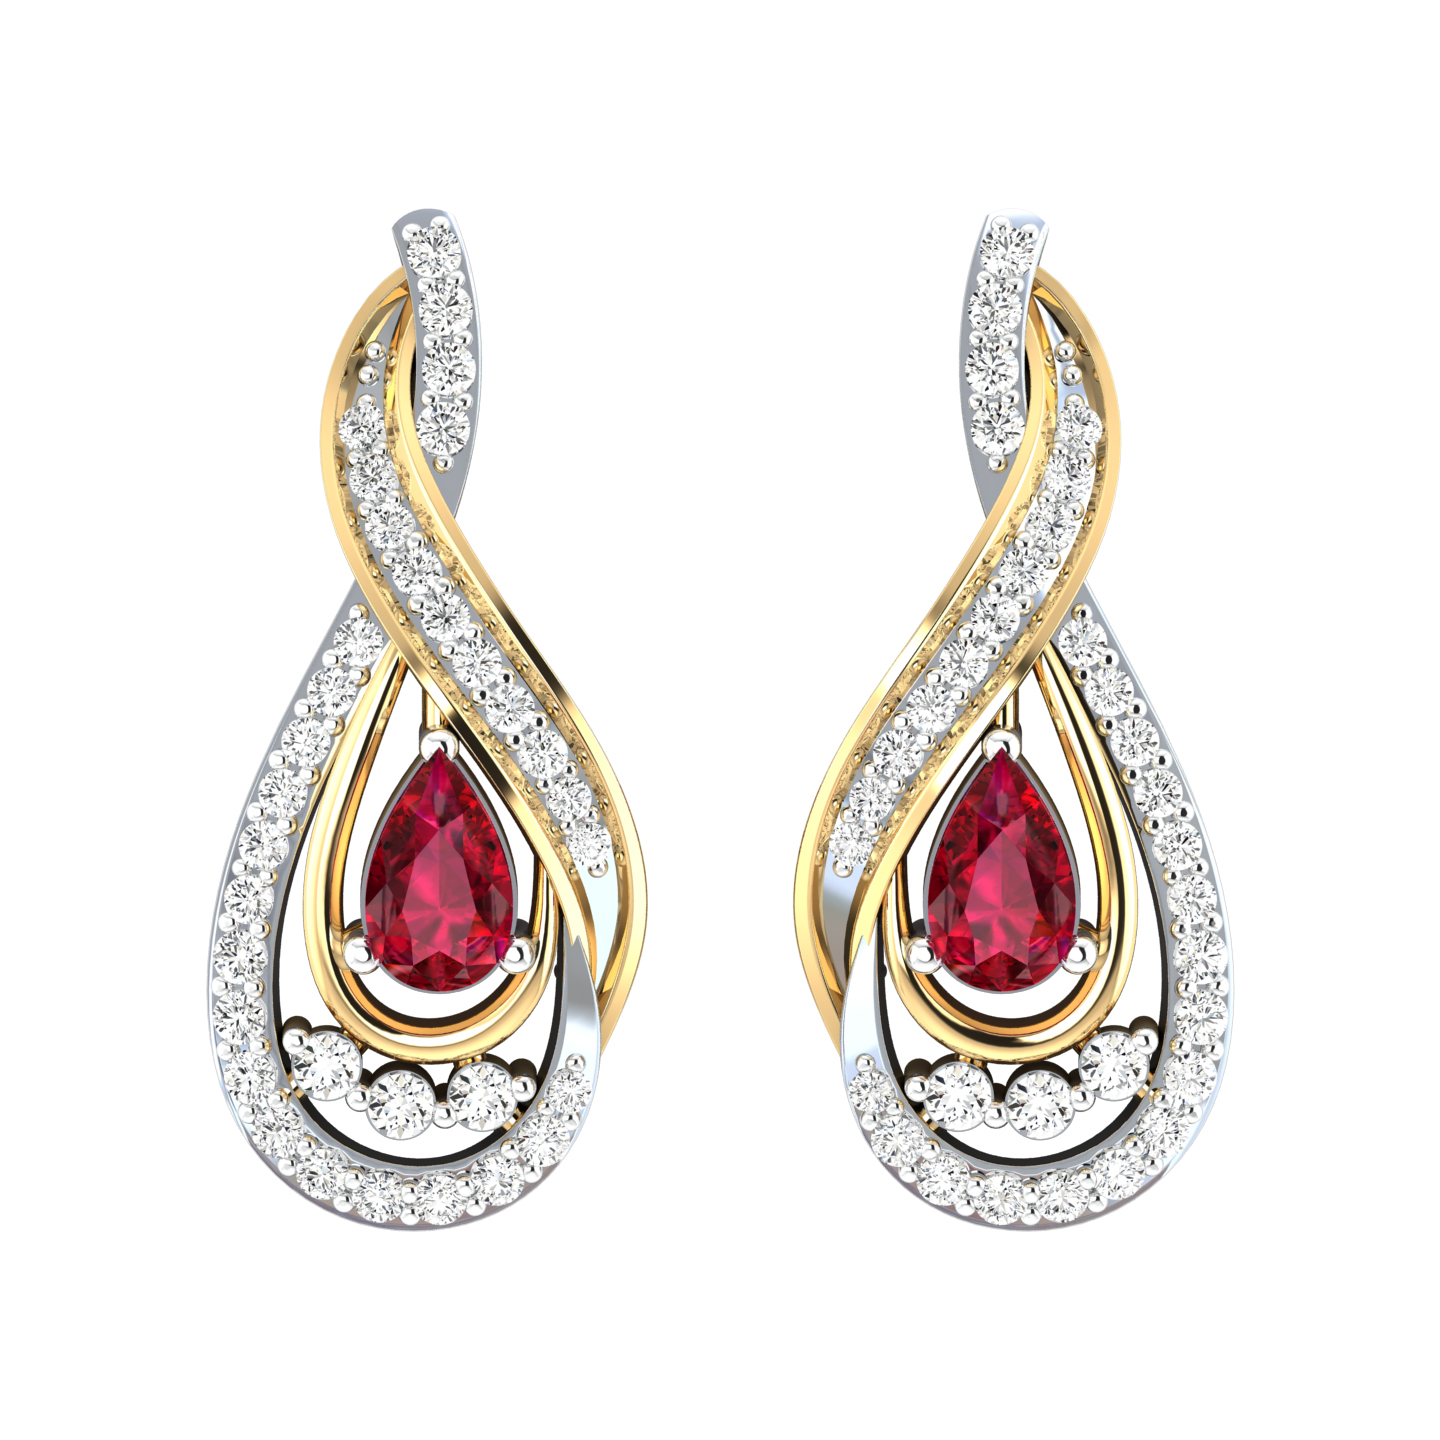 Emma Red Stone Diamond Earrings For Her